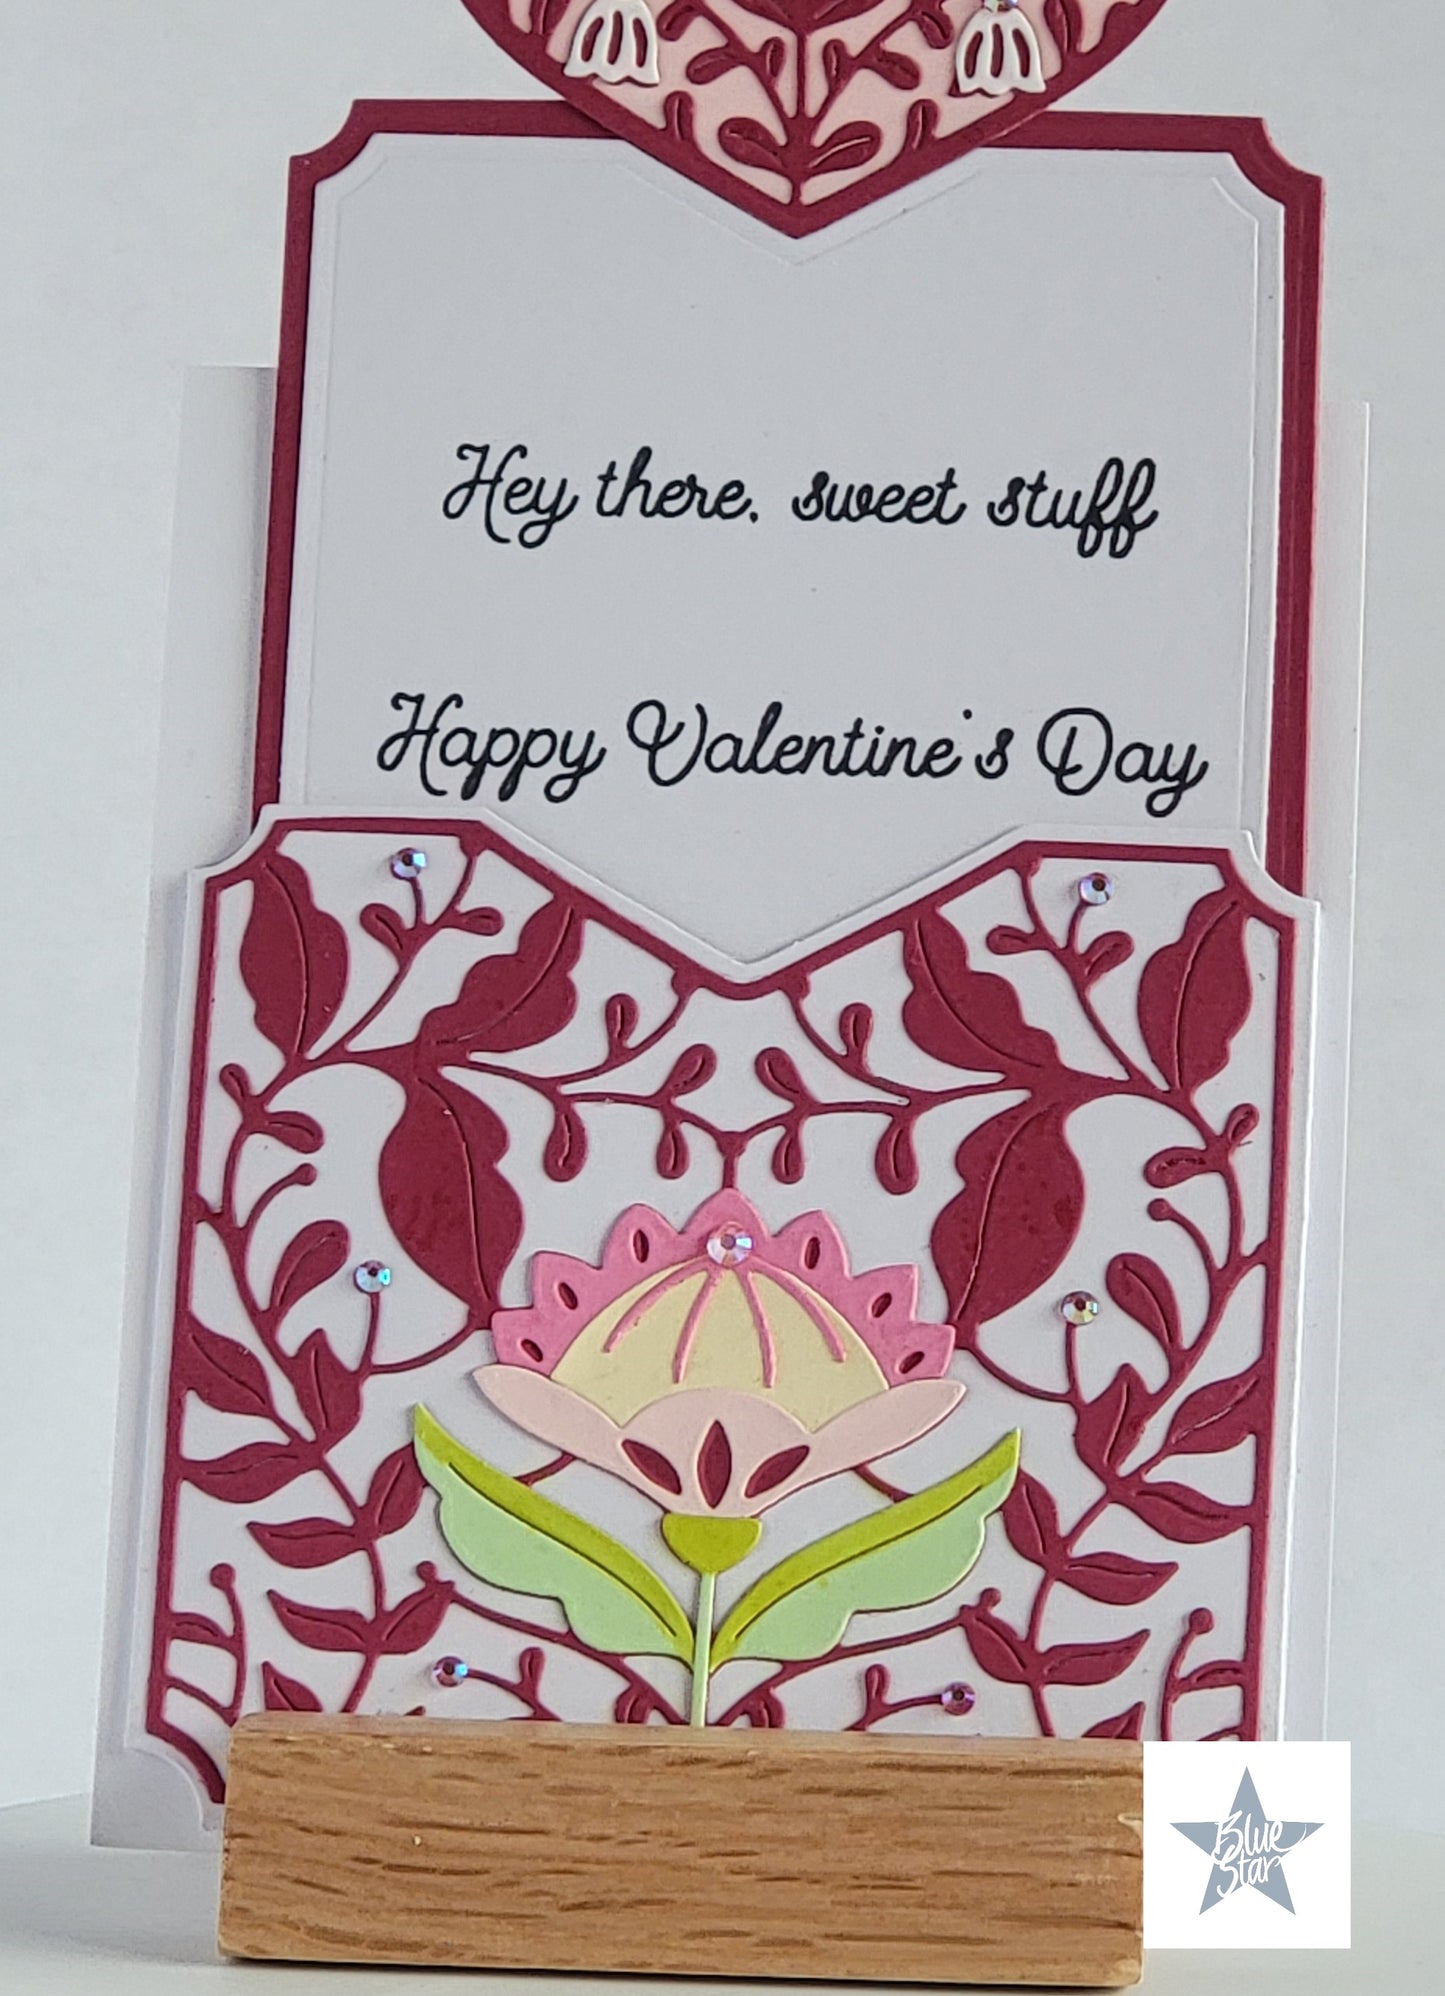 Happy Valentine's Day - Sweet Stuff Greeting Card